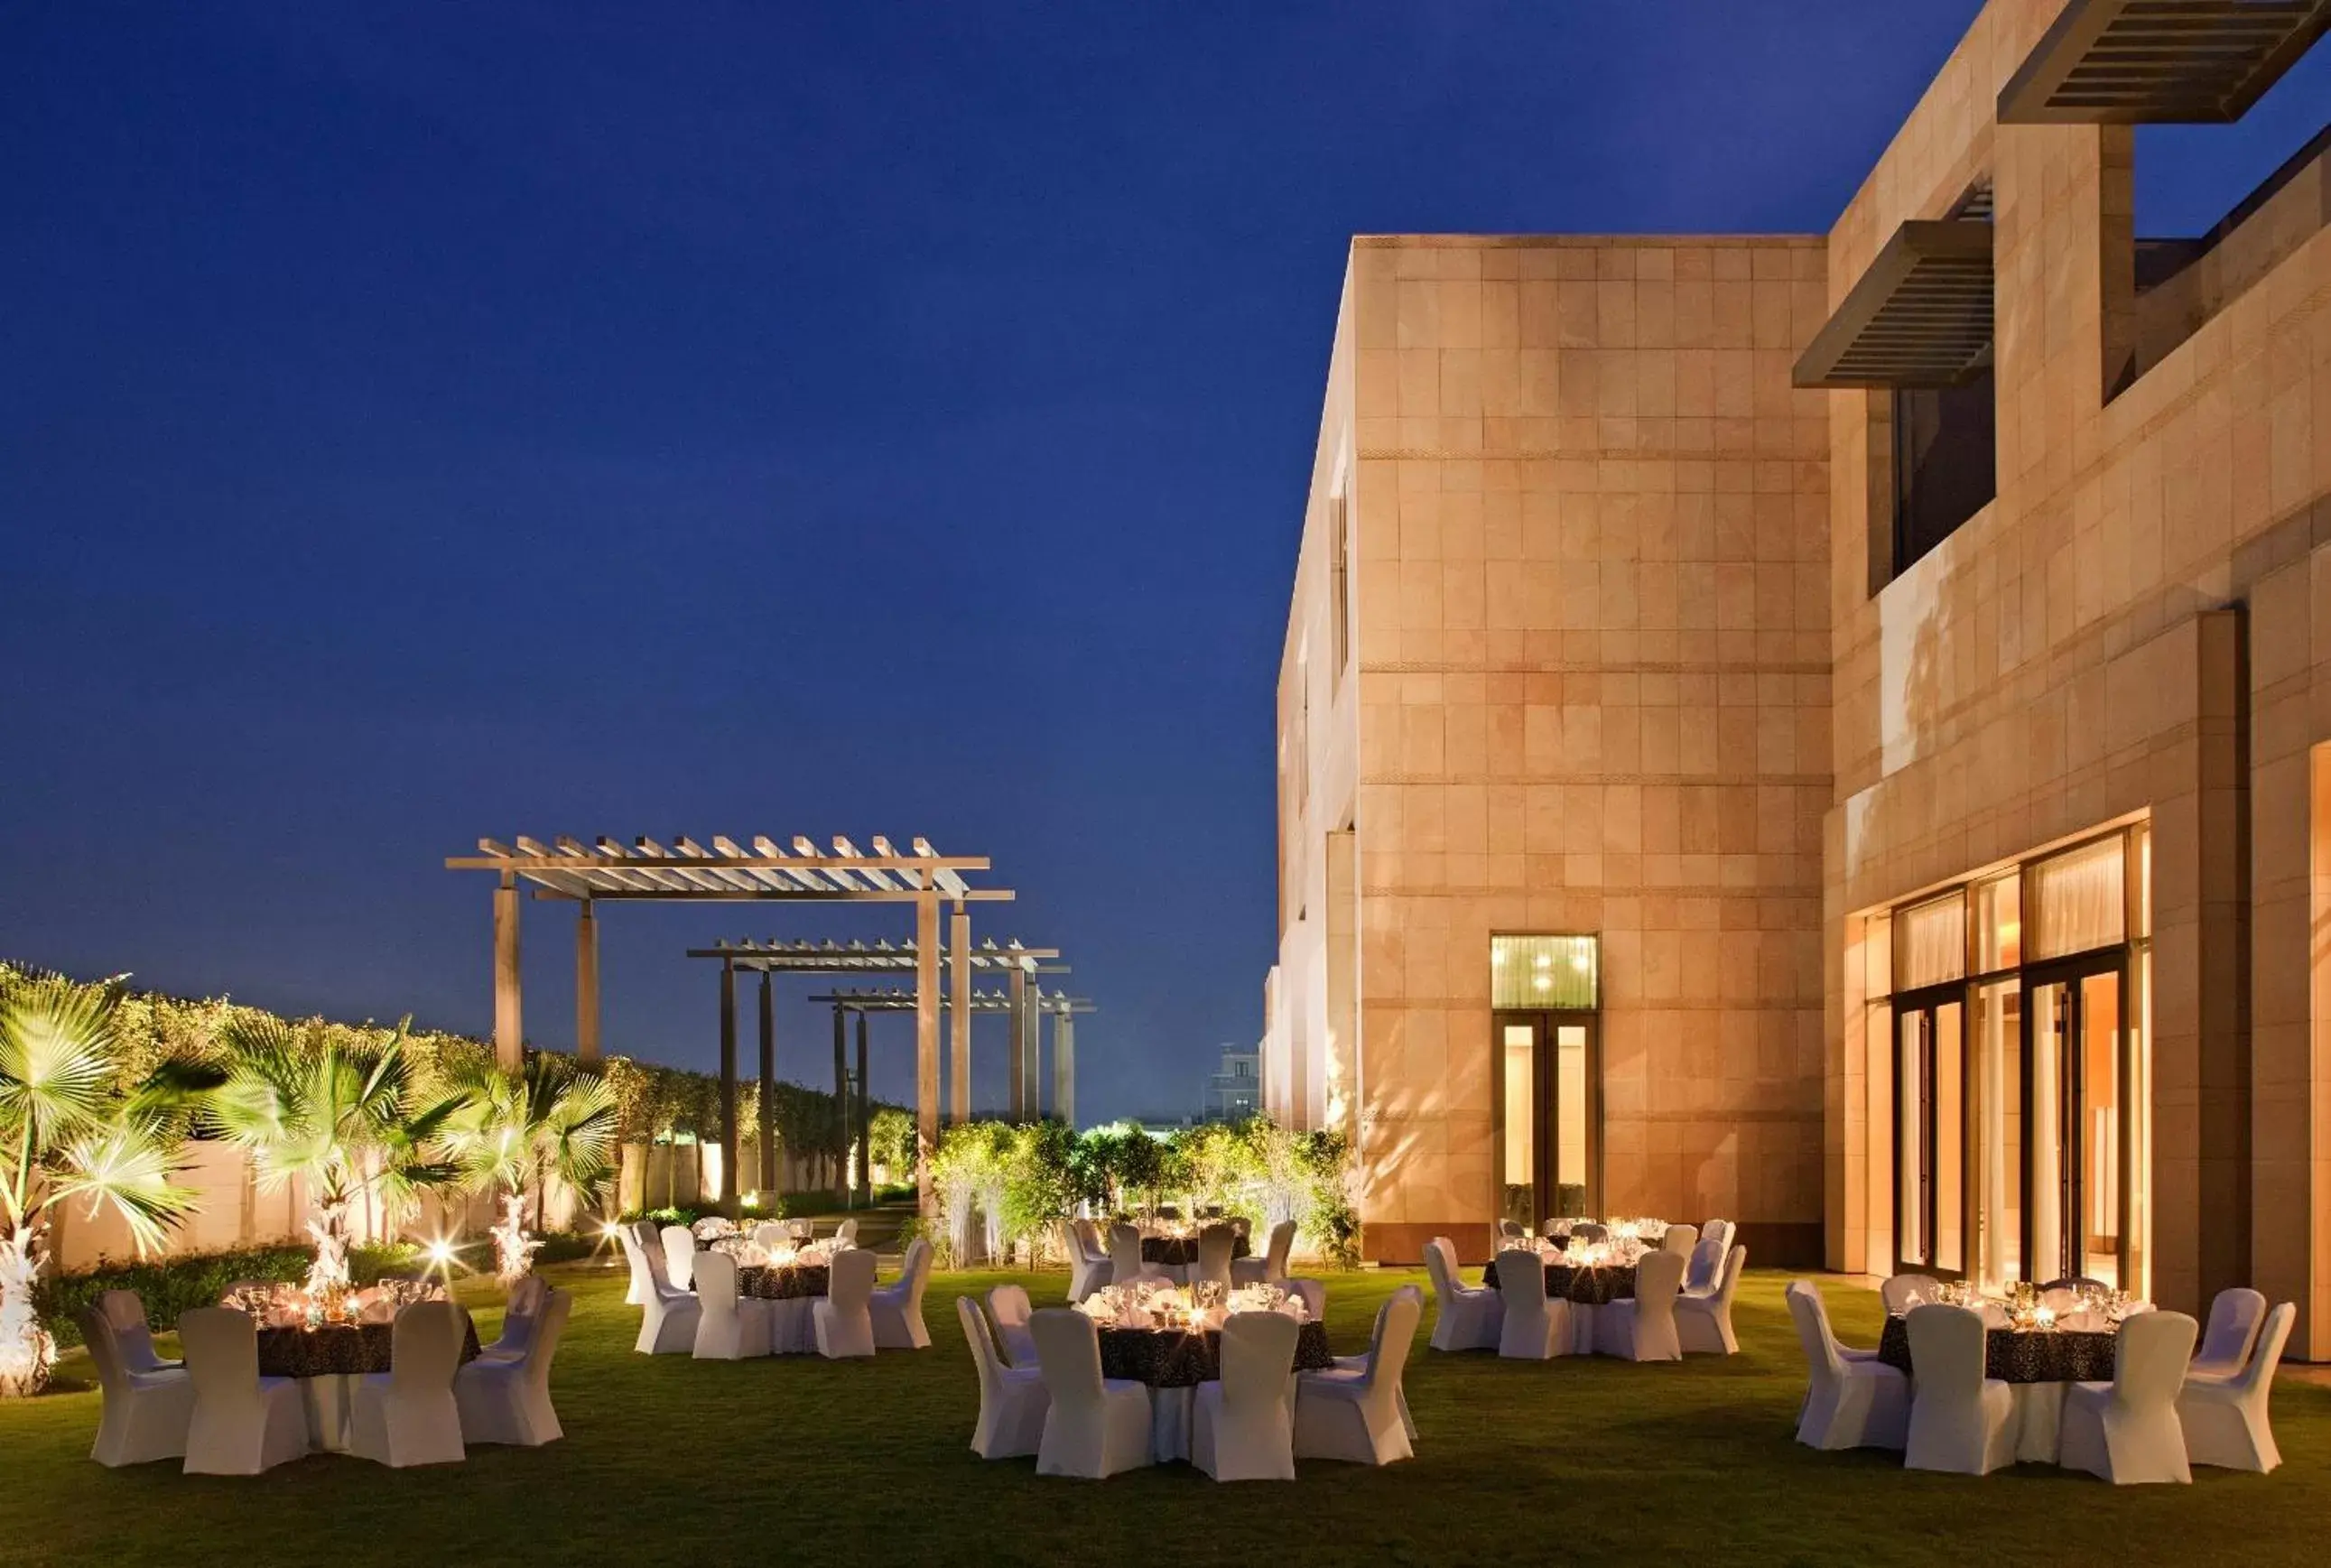 Garden, Banquet Facilities in Radisson Blu Hotel Amritsar